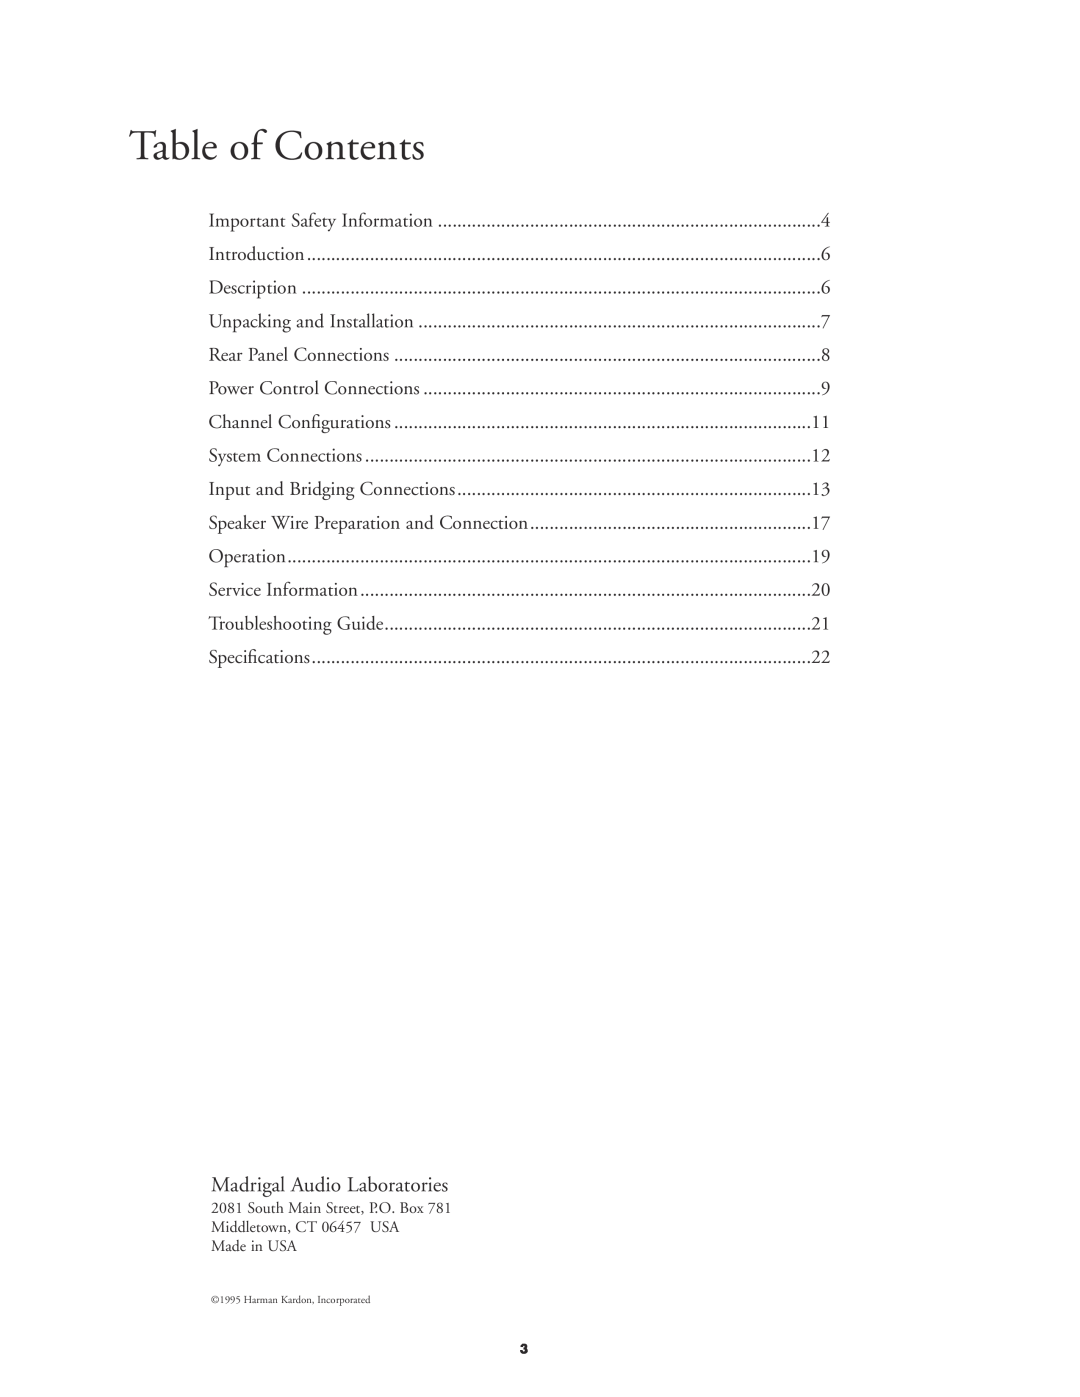 Harman-Kardon 5.1 manual Table of Contents, Madrigal Audio Laboratories 